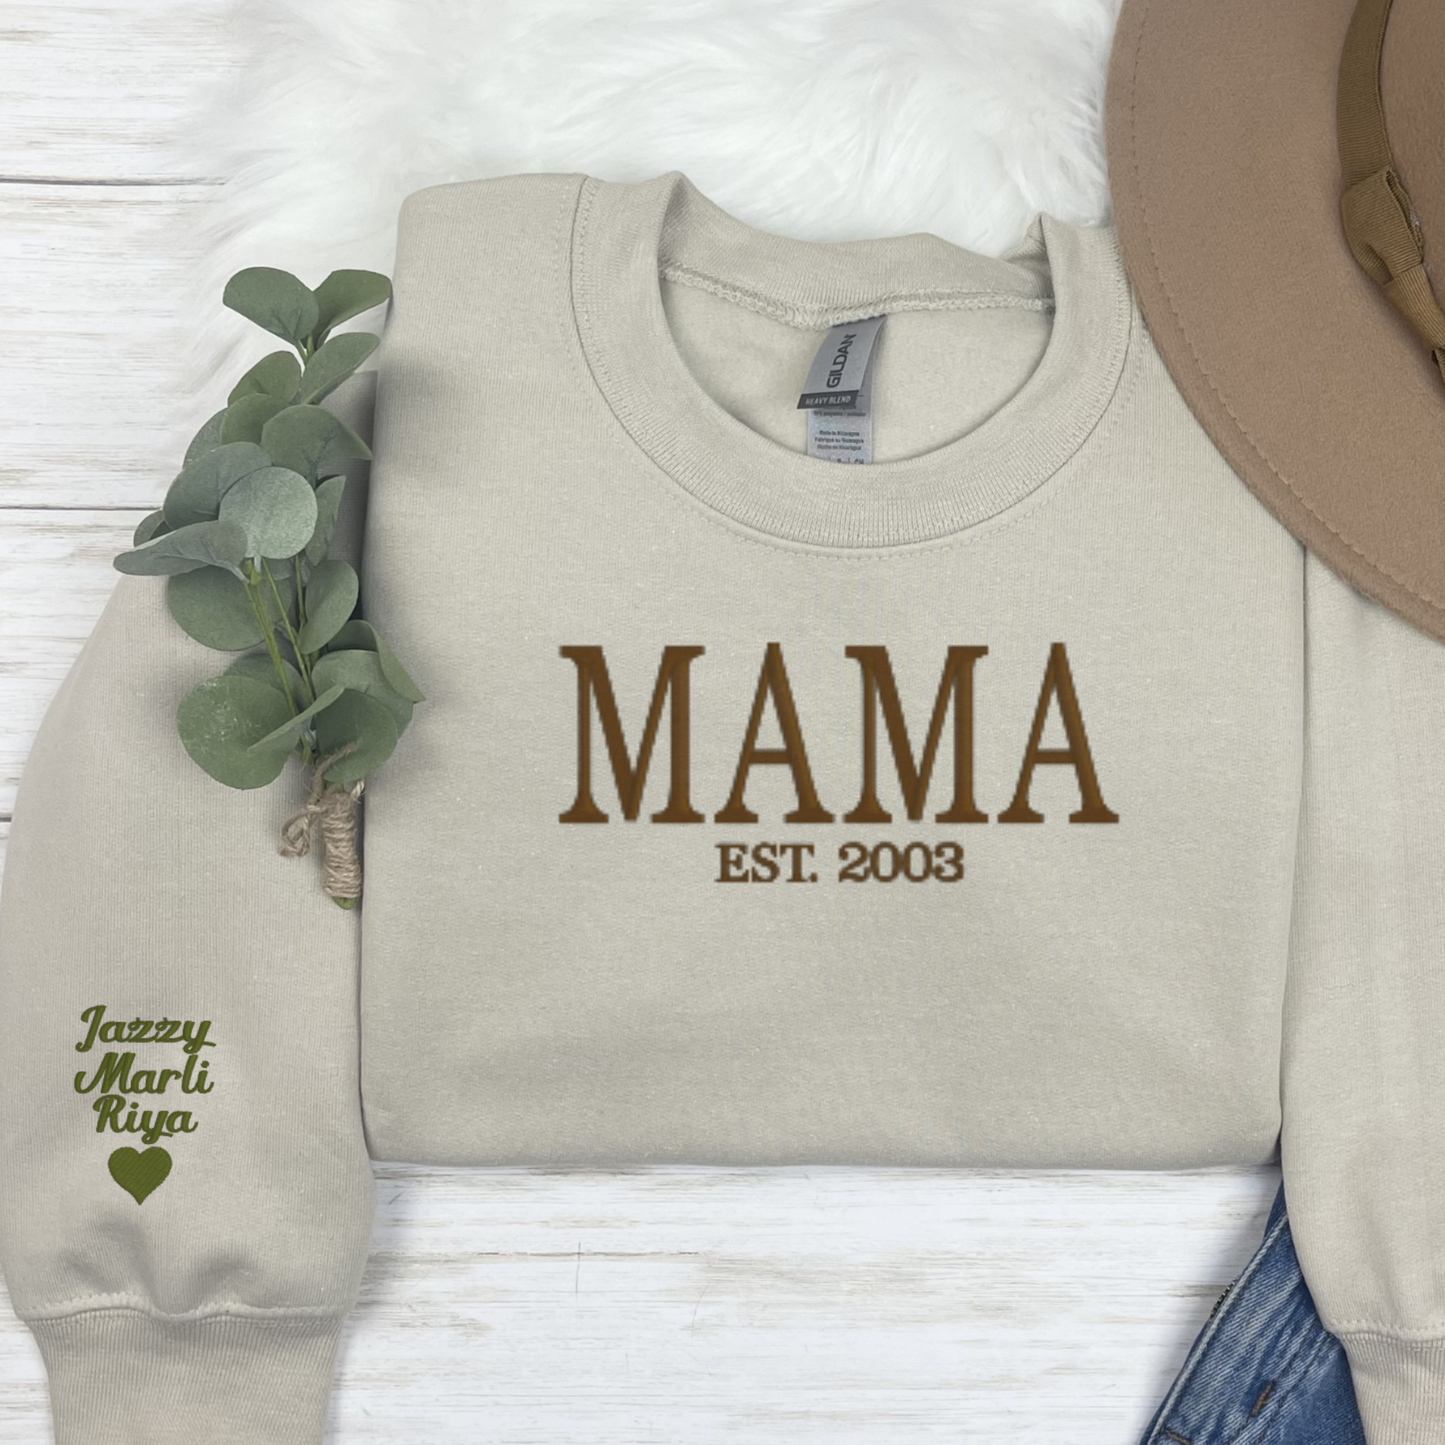 Mom / Mama Crewneck Sweater with kids name on sleeve..